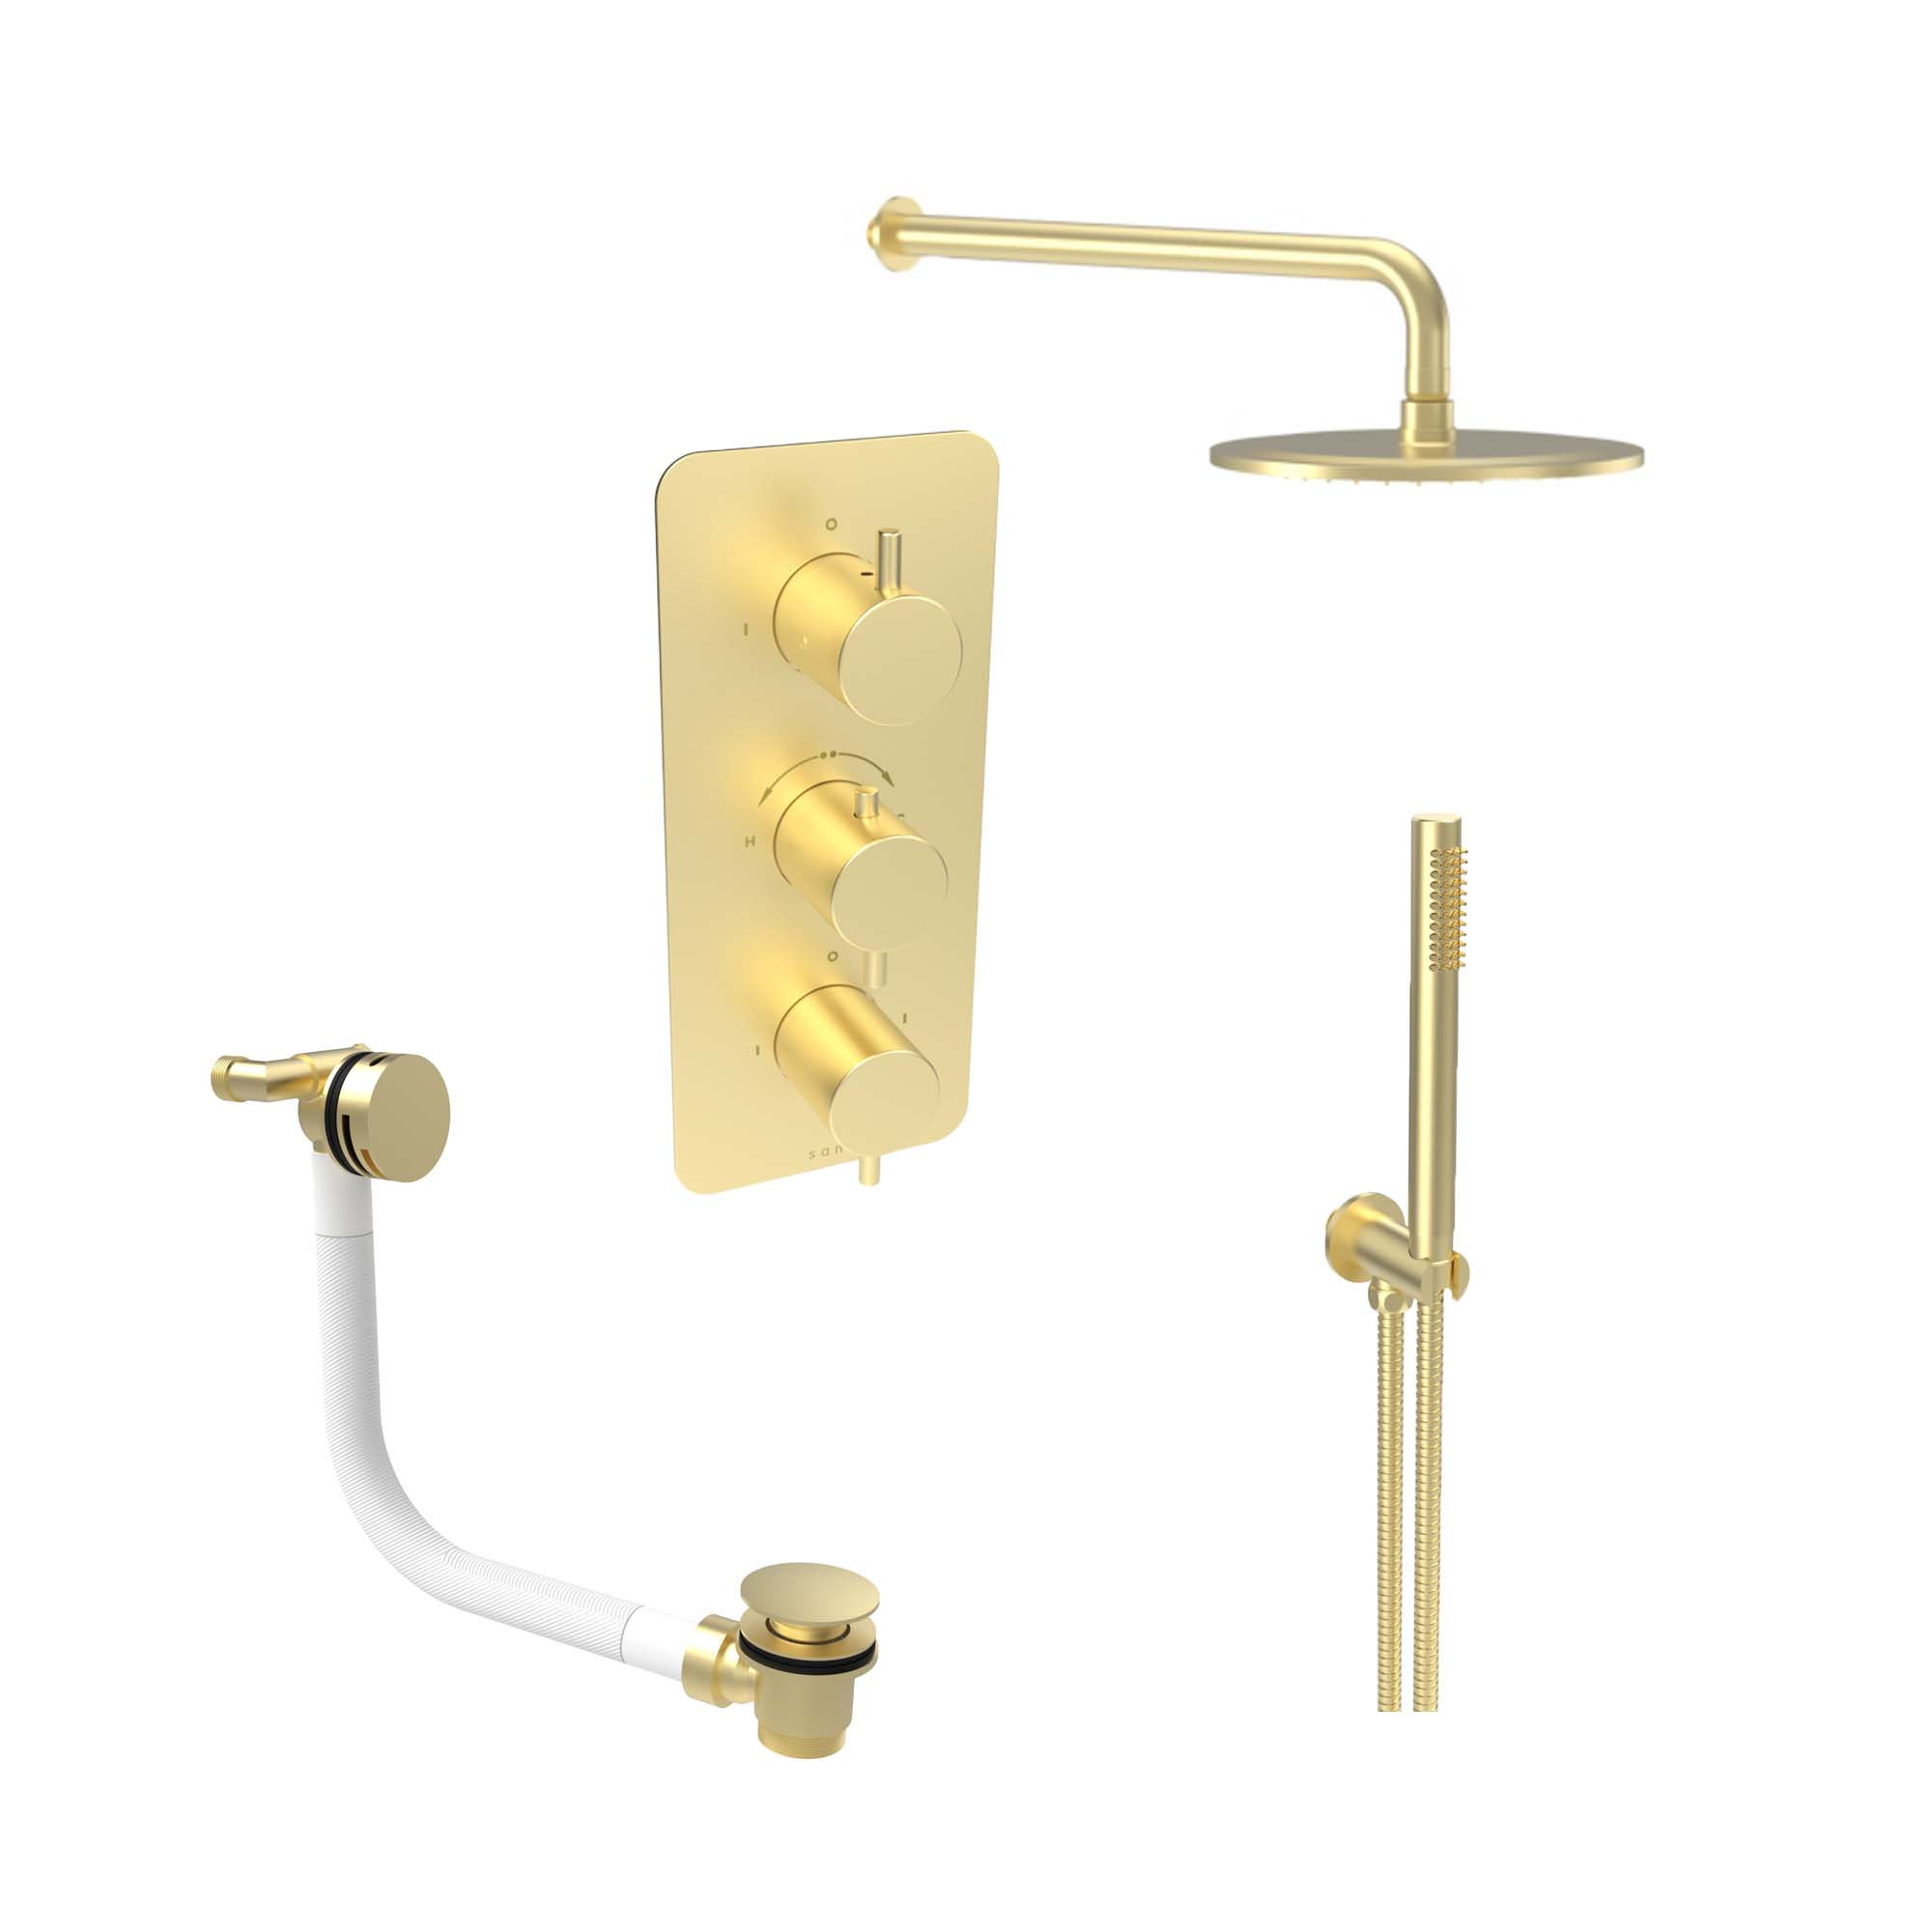 COS 3 way shower kit - Brushed Brass